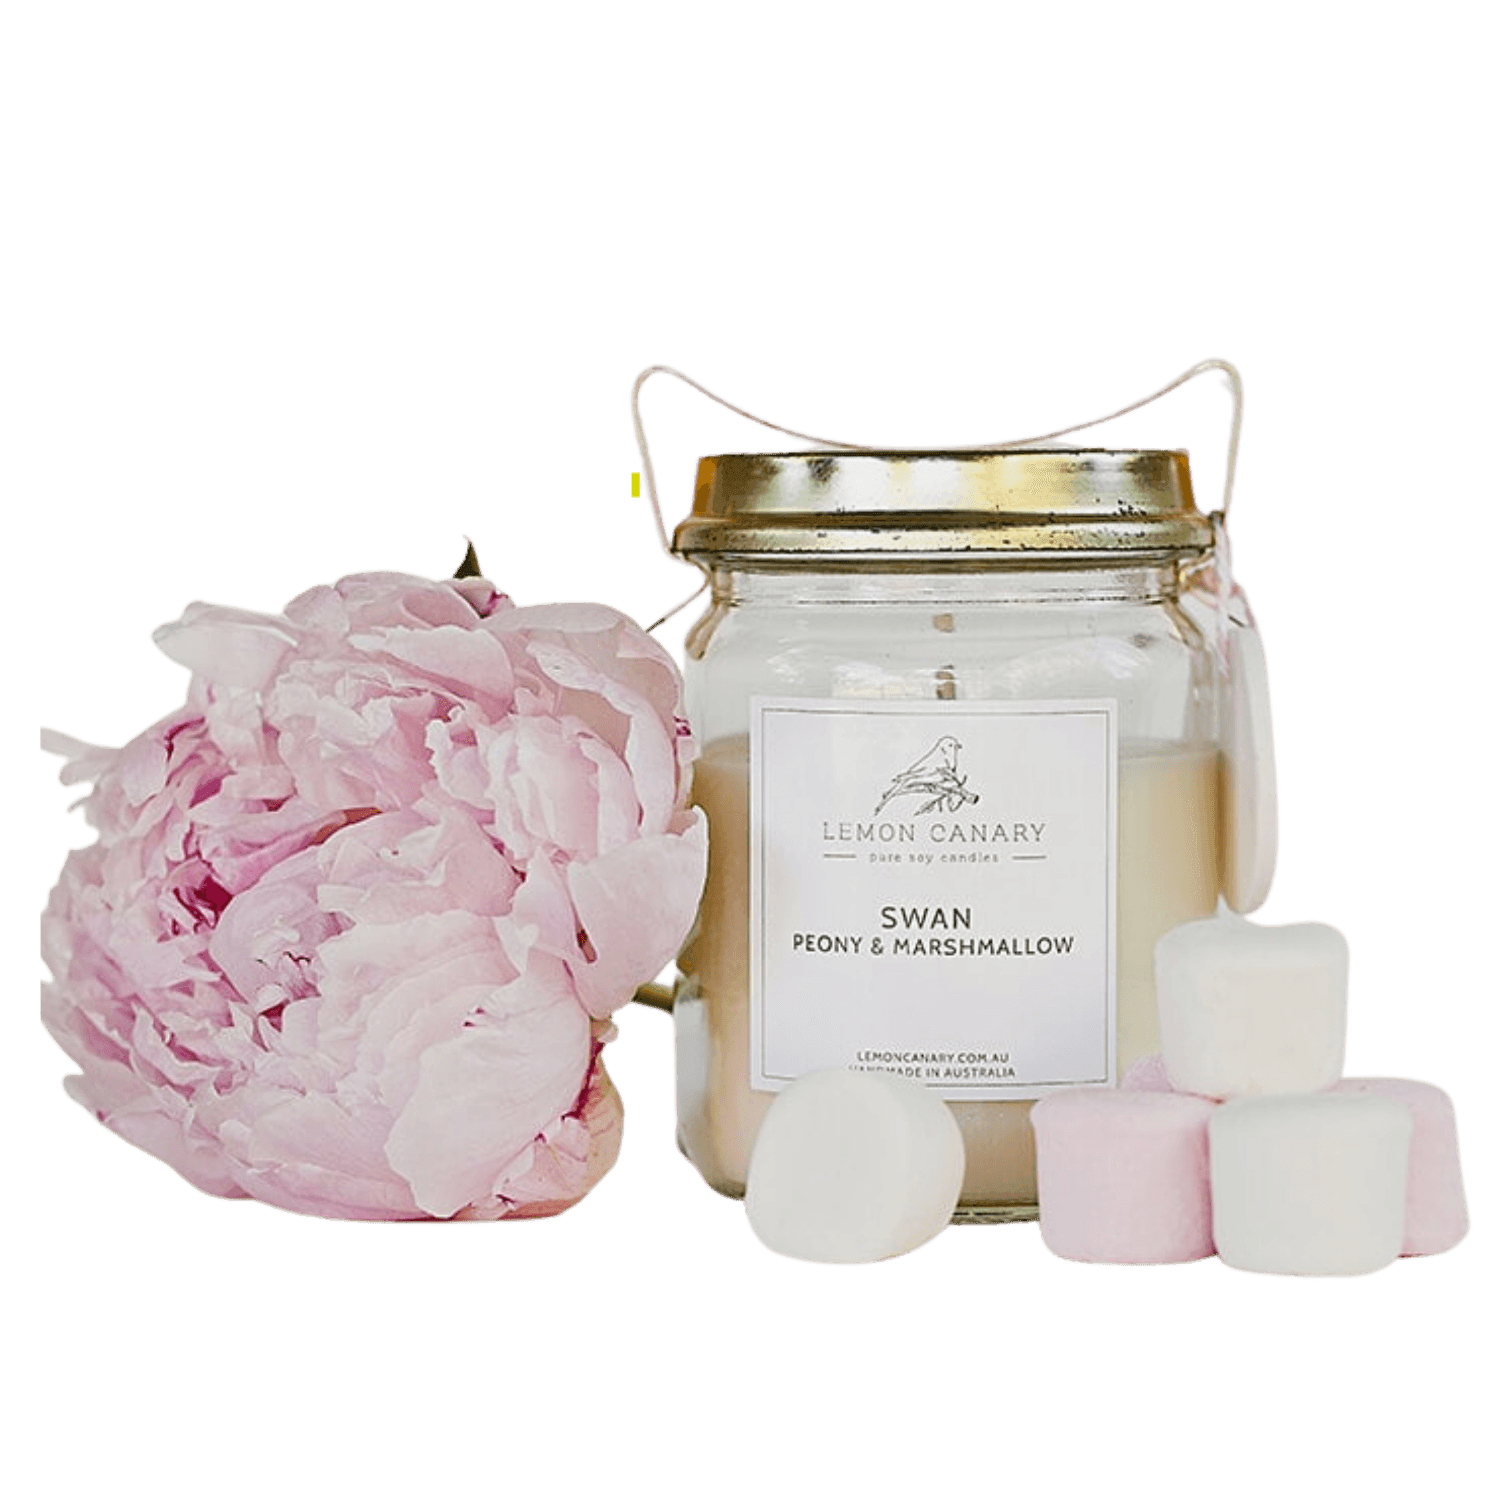 Candle - Lemon Canary - Swan, Peony & Marshmallow | Vintage Jar | 350mL - The Gift Company